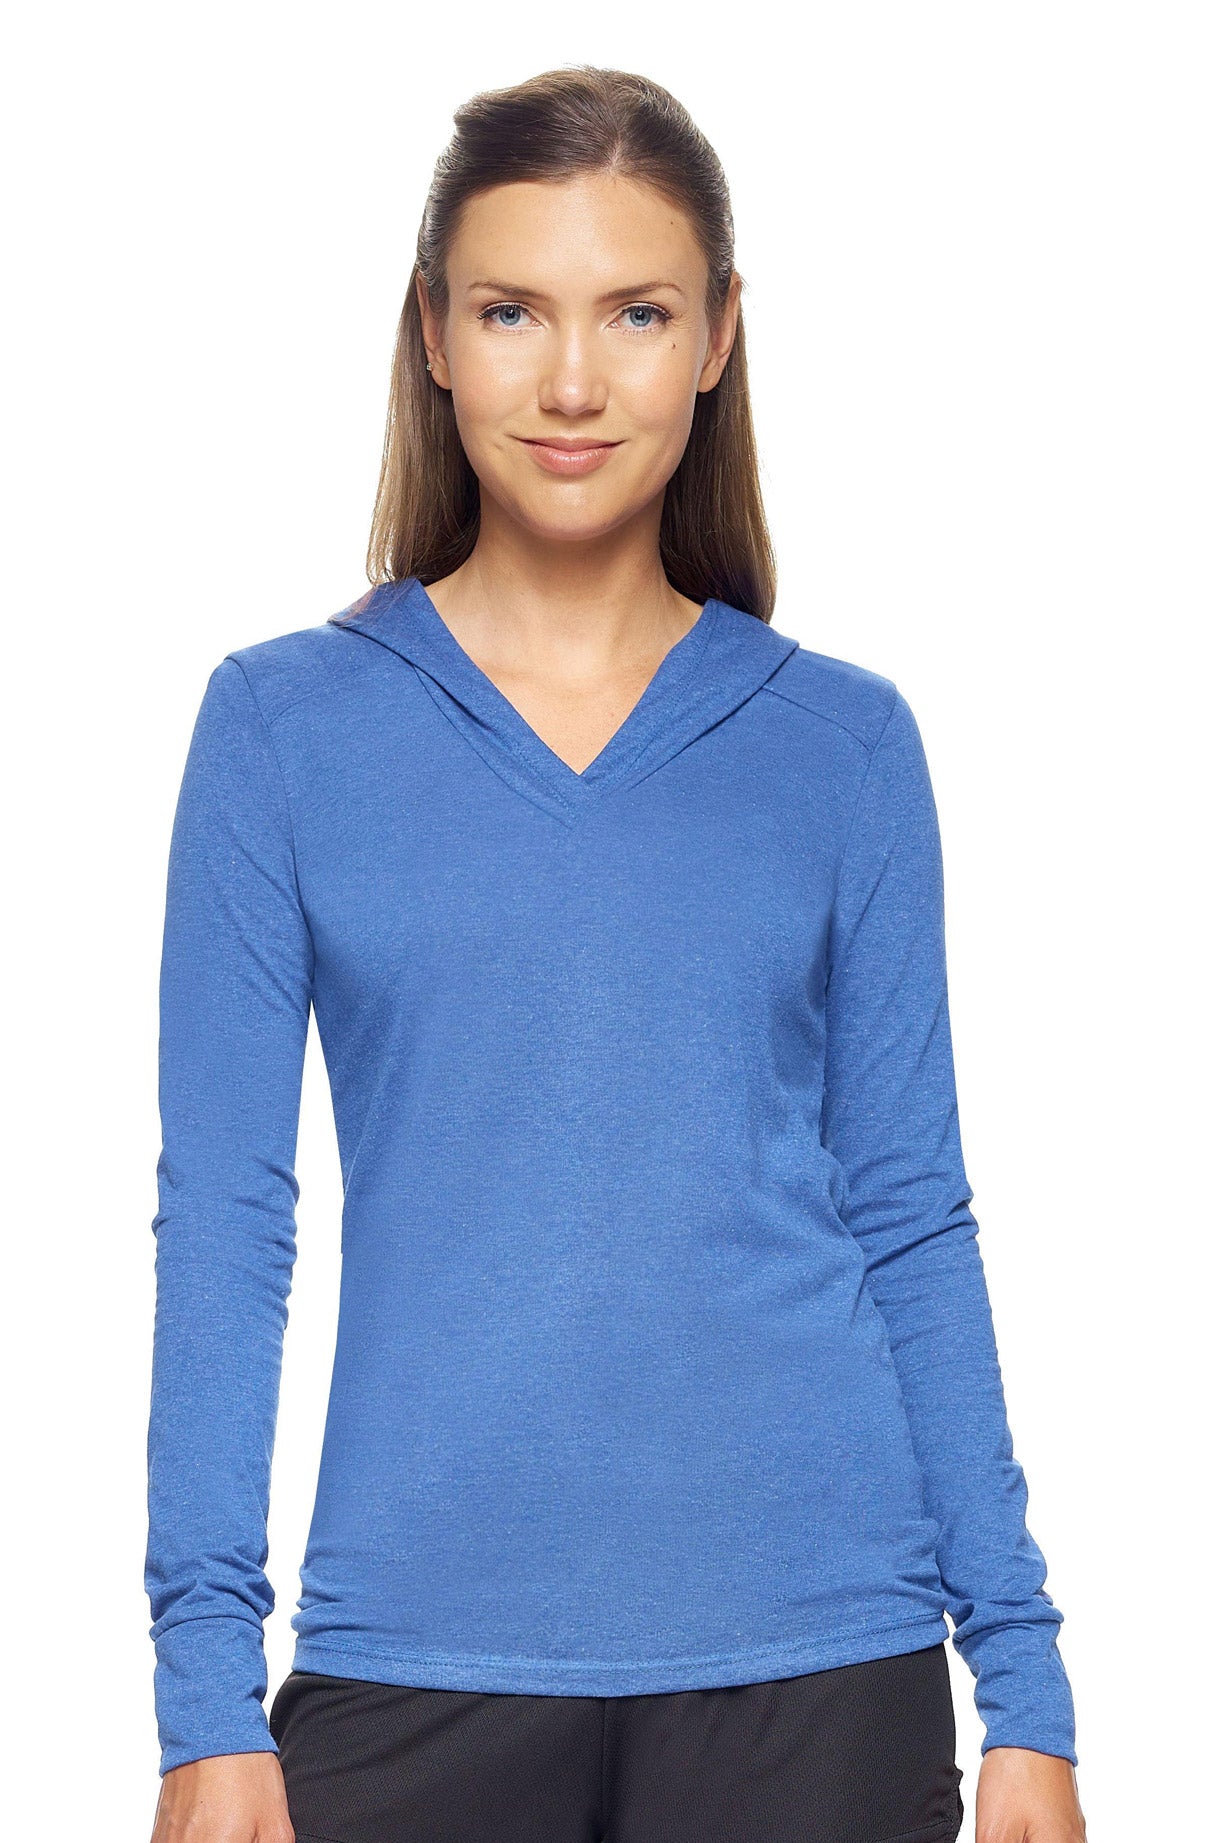 Expert Brand Wholesale Women's Hoodie Shirt Performance in Dark Heather Royal Blue#dark-heather-royal